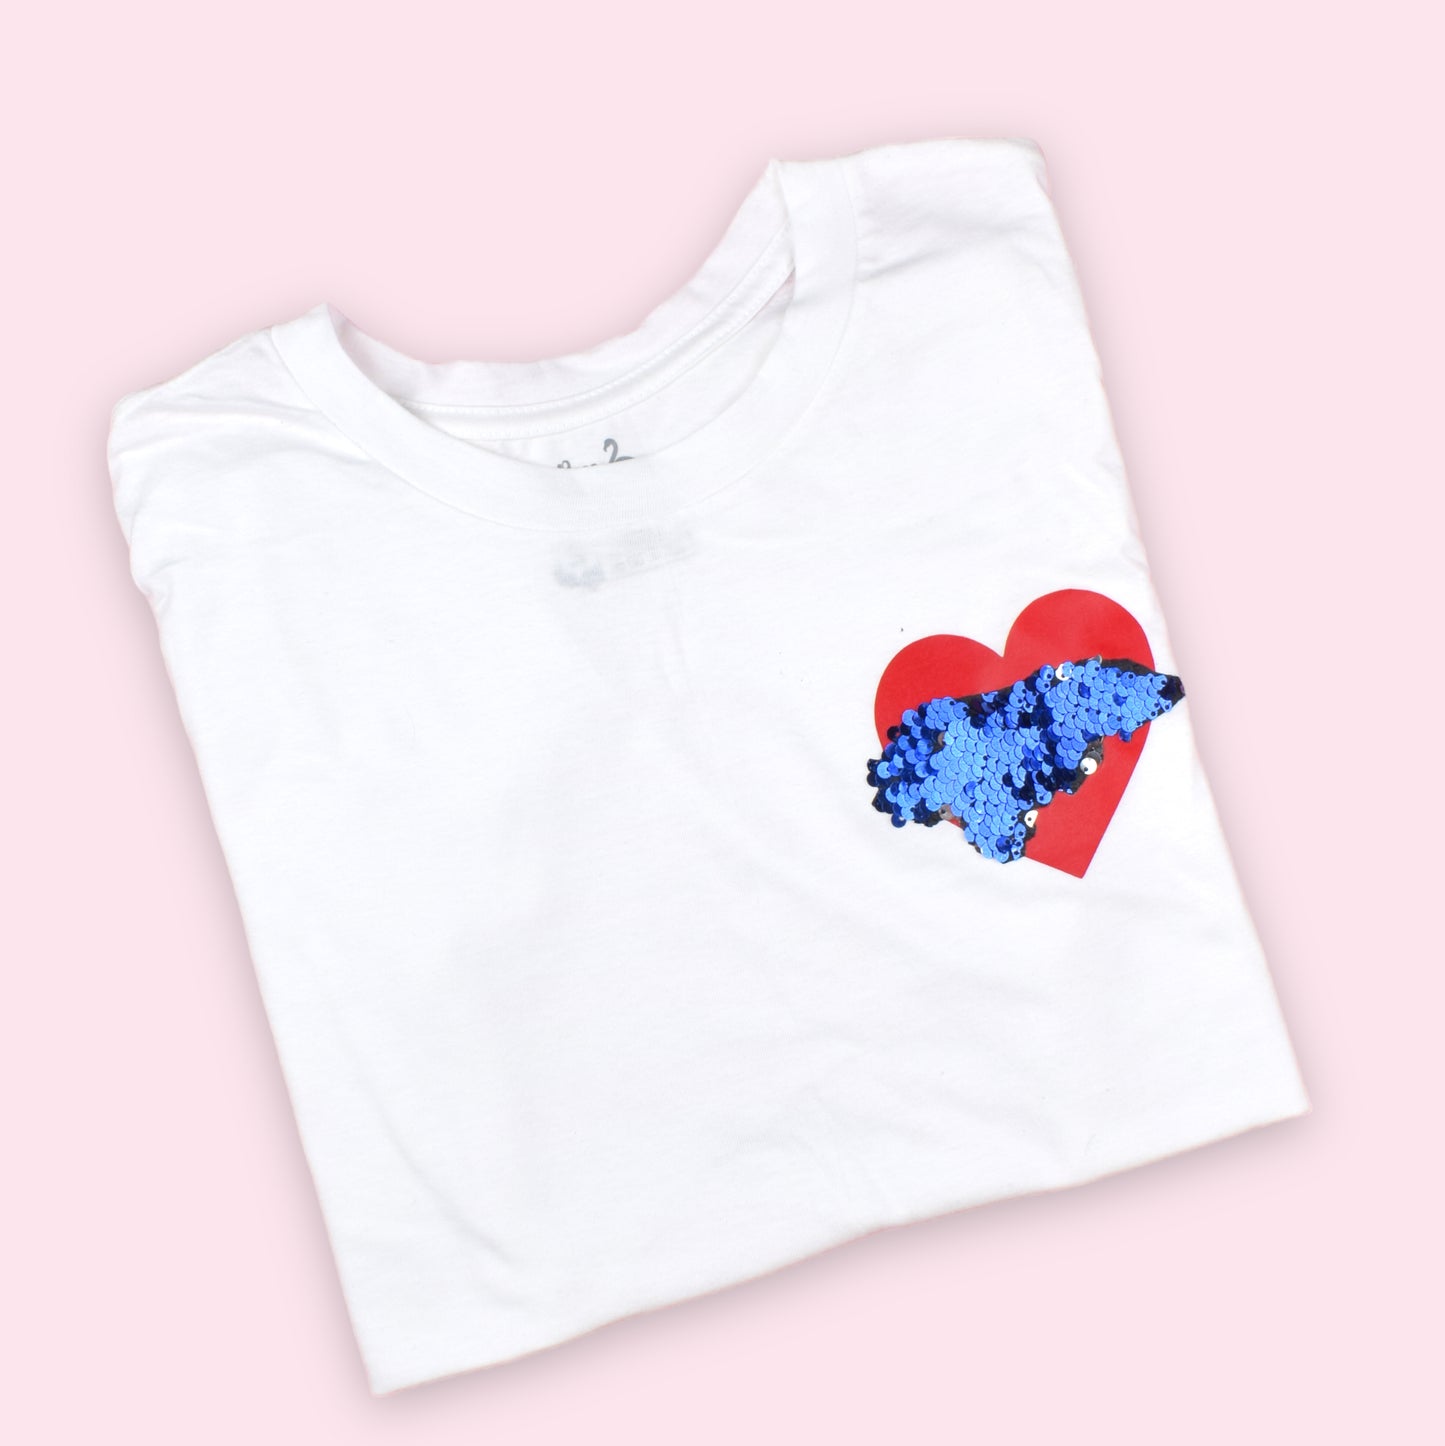 Honduras Heart T-shirt Mujer